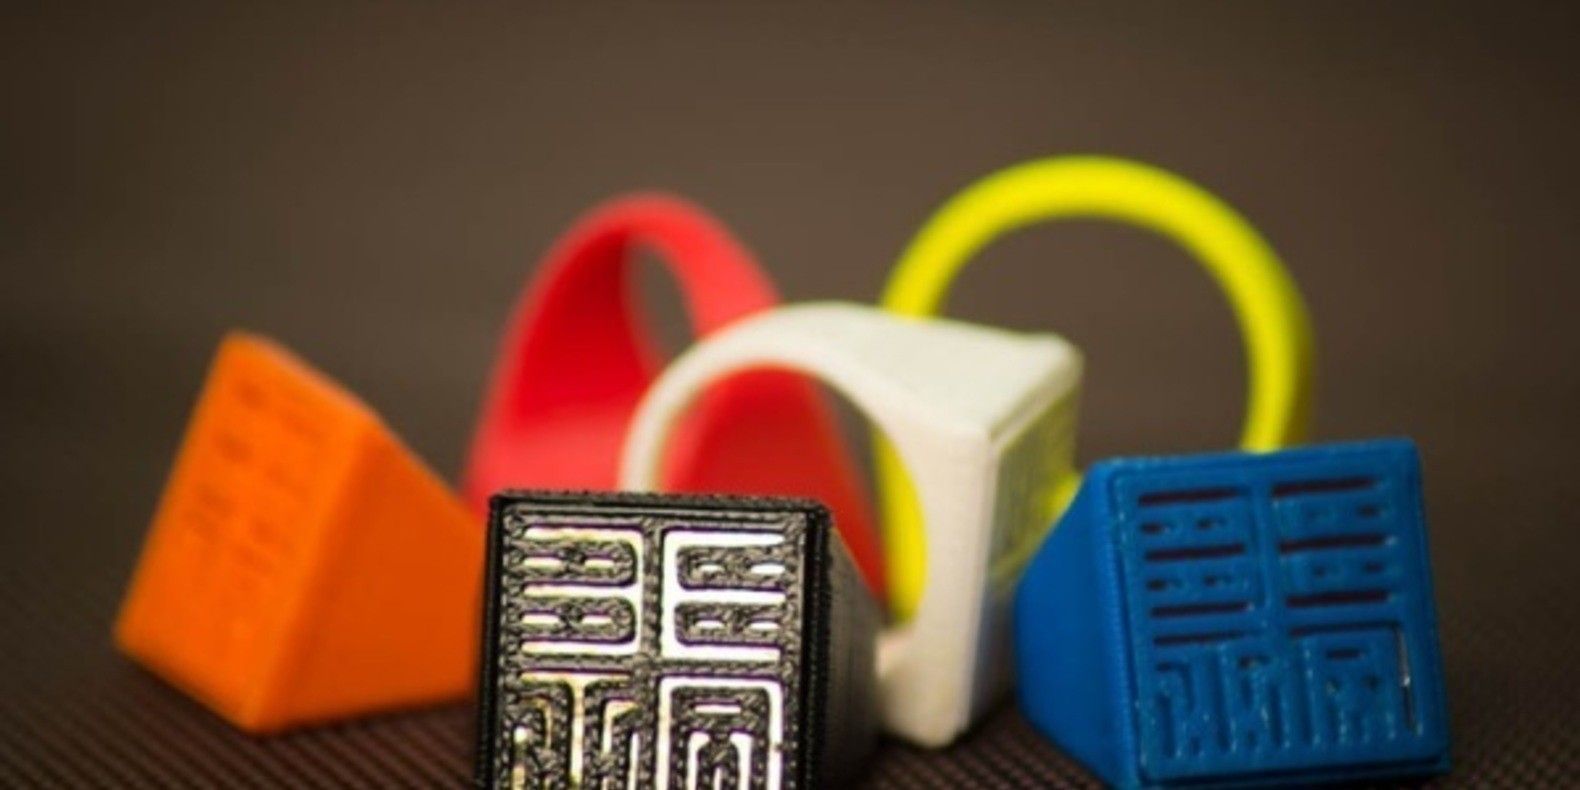 sesame ring theory 3D printed bague imprimée en 3D cults3D fichier 3D kickstarter boston MIT 1